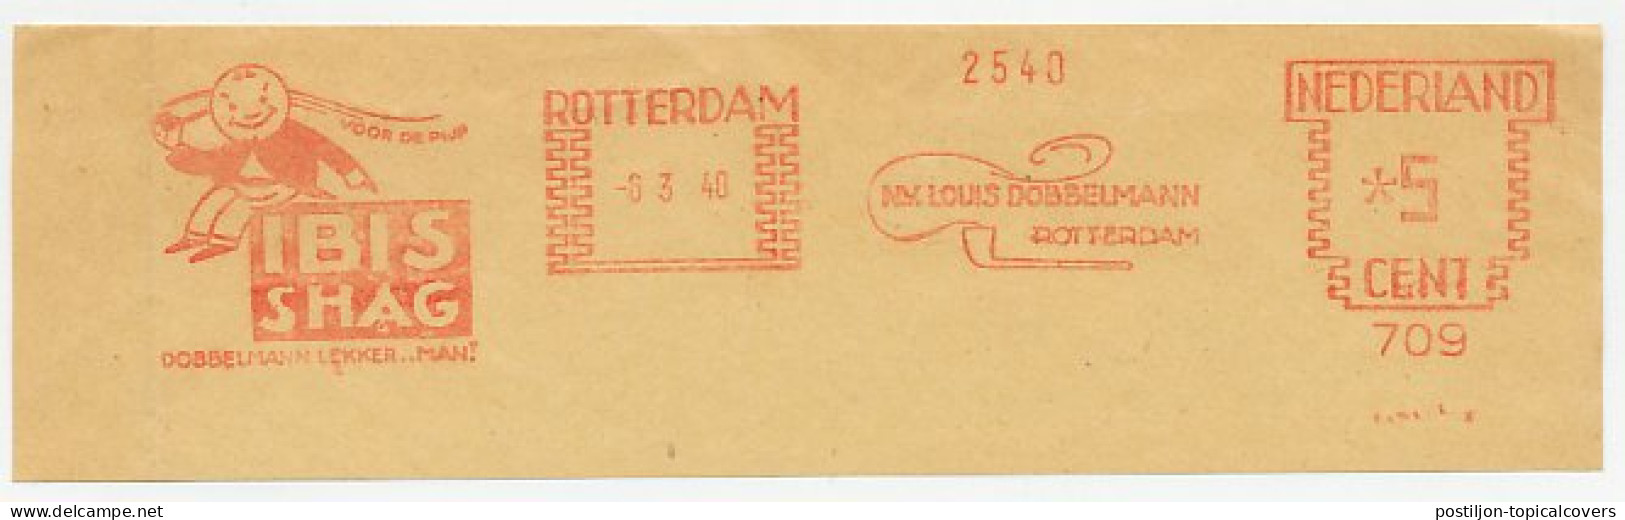 Meter Cut Netherlands 1940 Ibis Shag - Tobacco - Pipe Smoking - Tabac